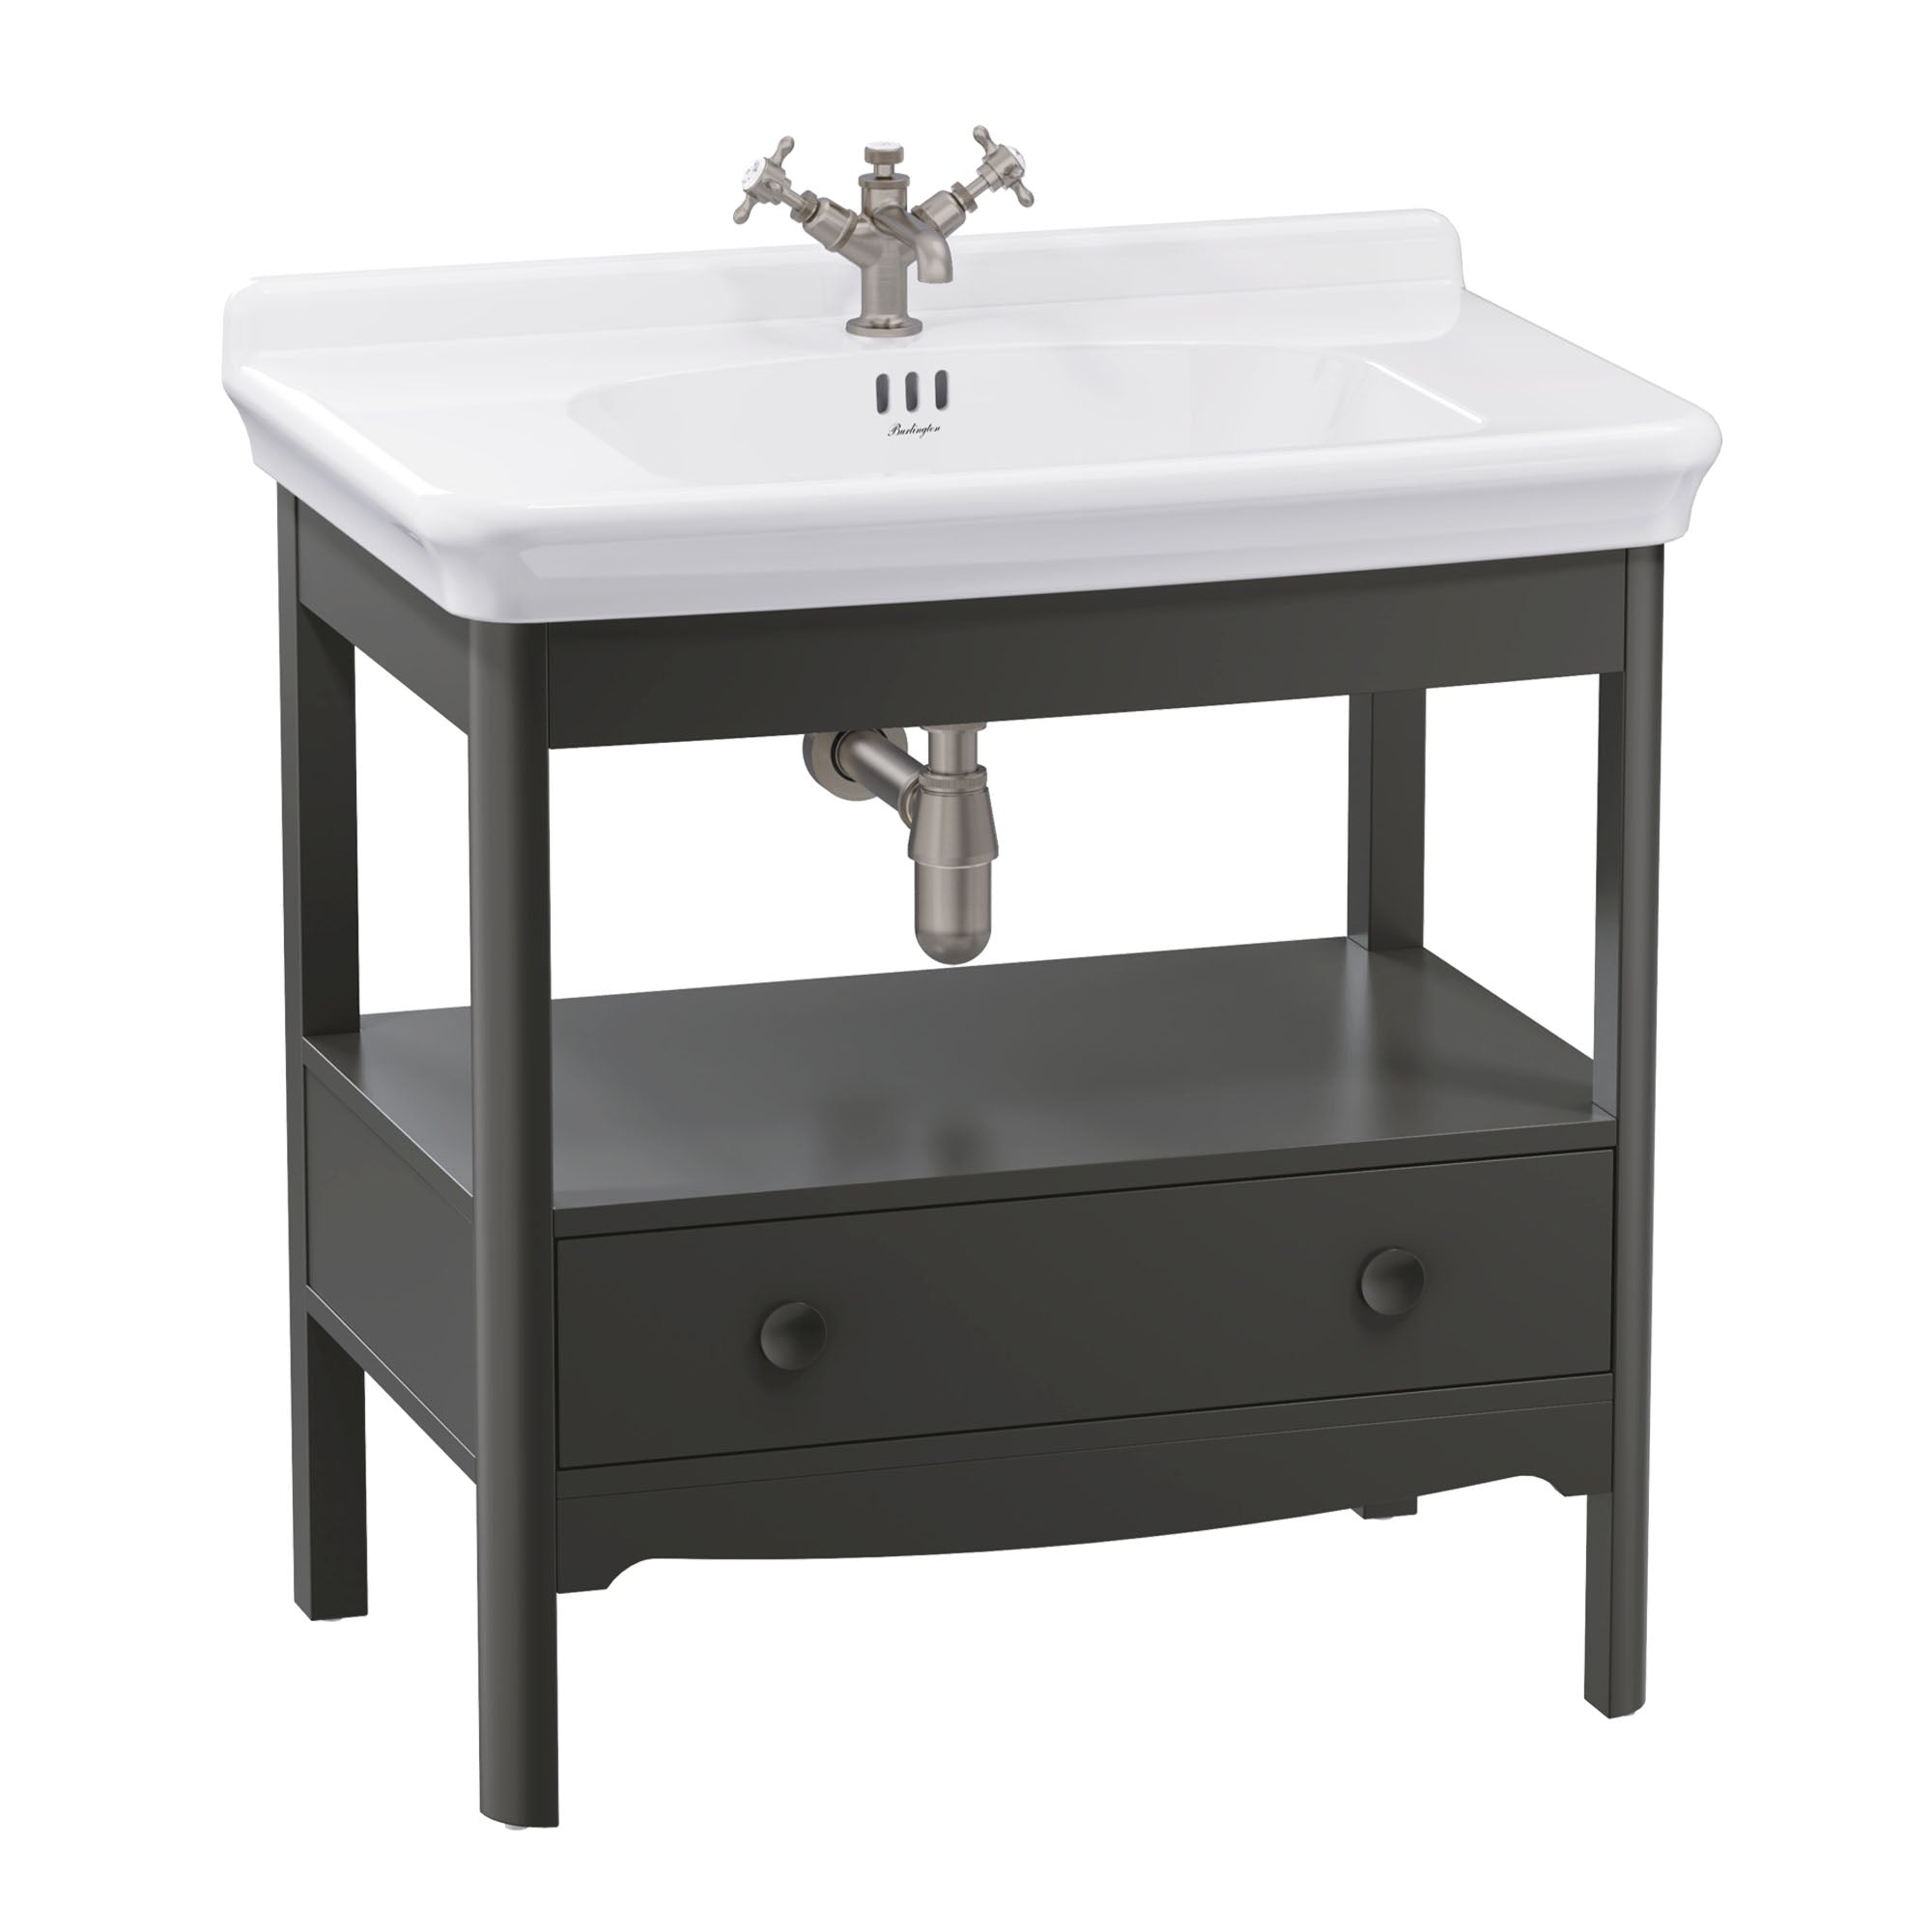 burlington guild 850 floorstanding single drawer vanity unit washbasin ashbee grey